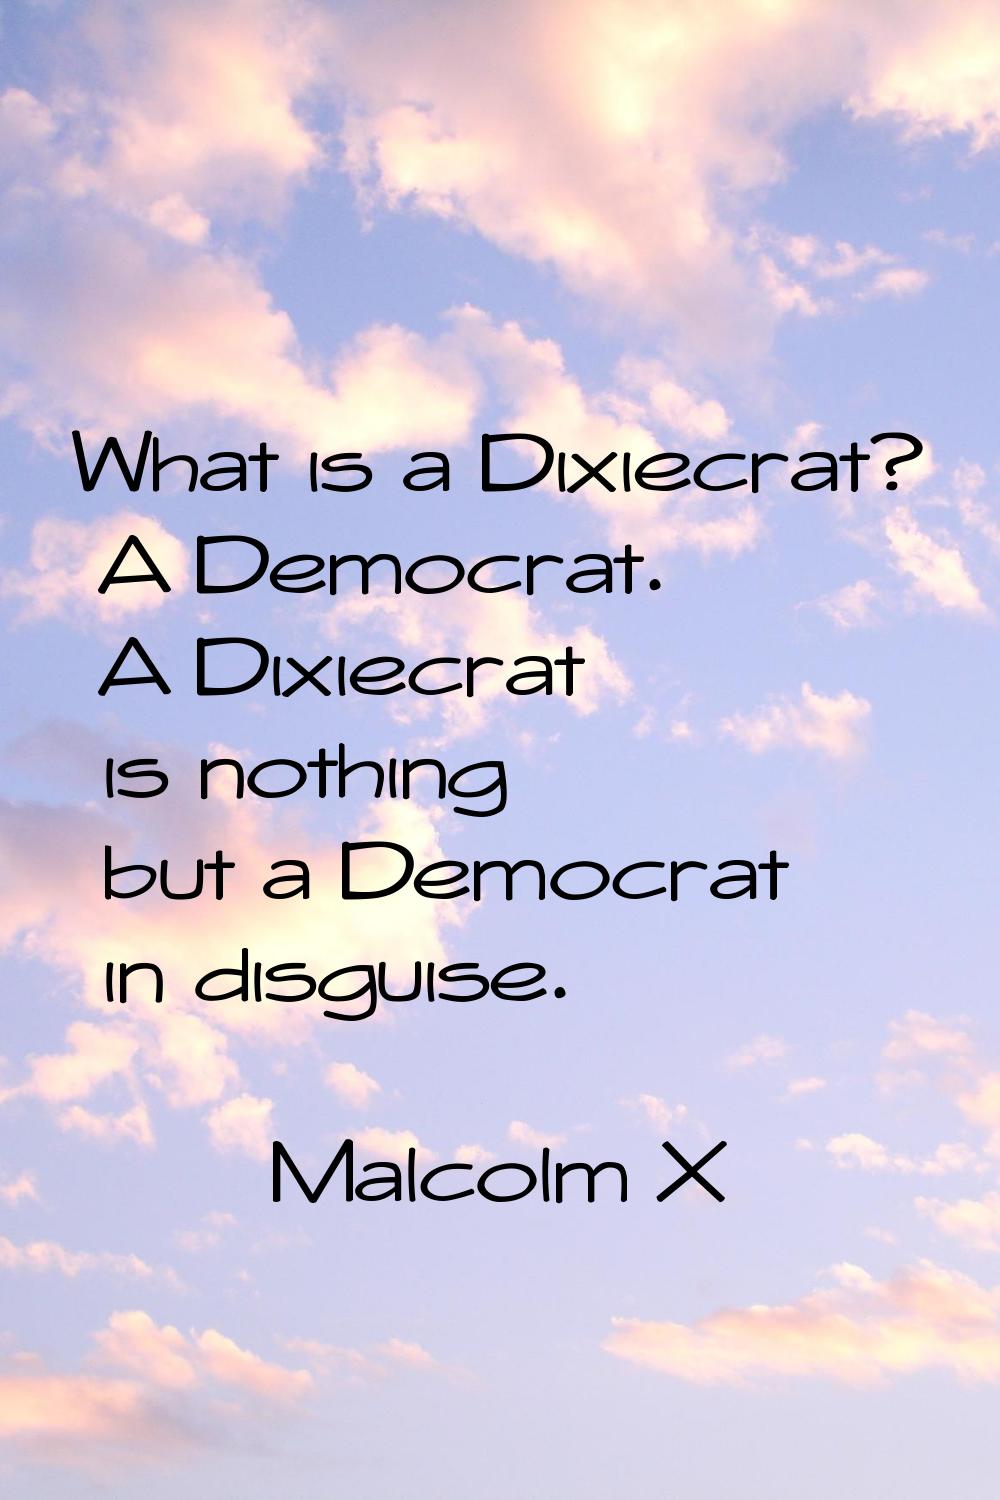 What is a Dixiecrat? A Democrat. A Dixiecrat is nothing but a Democrat in disguise.